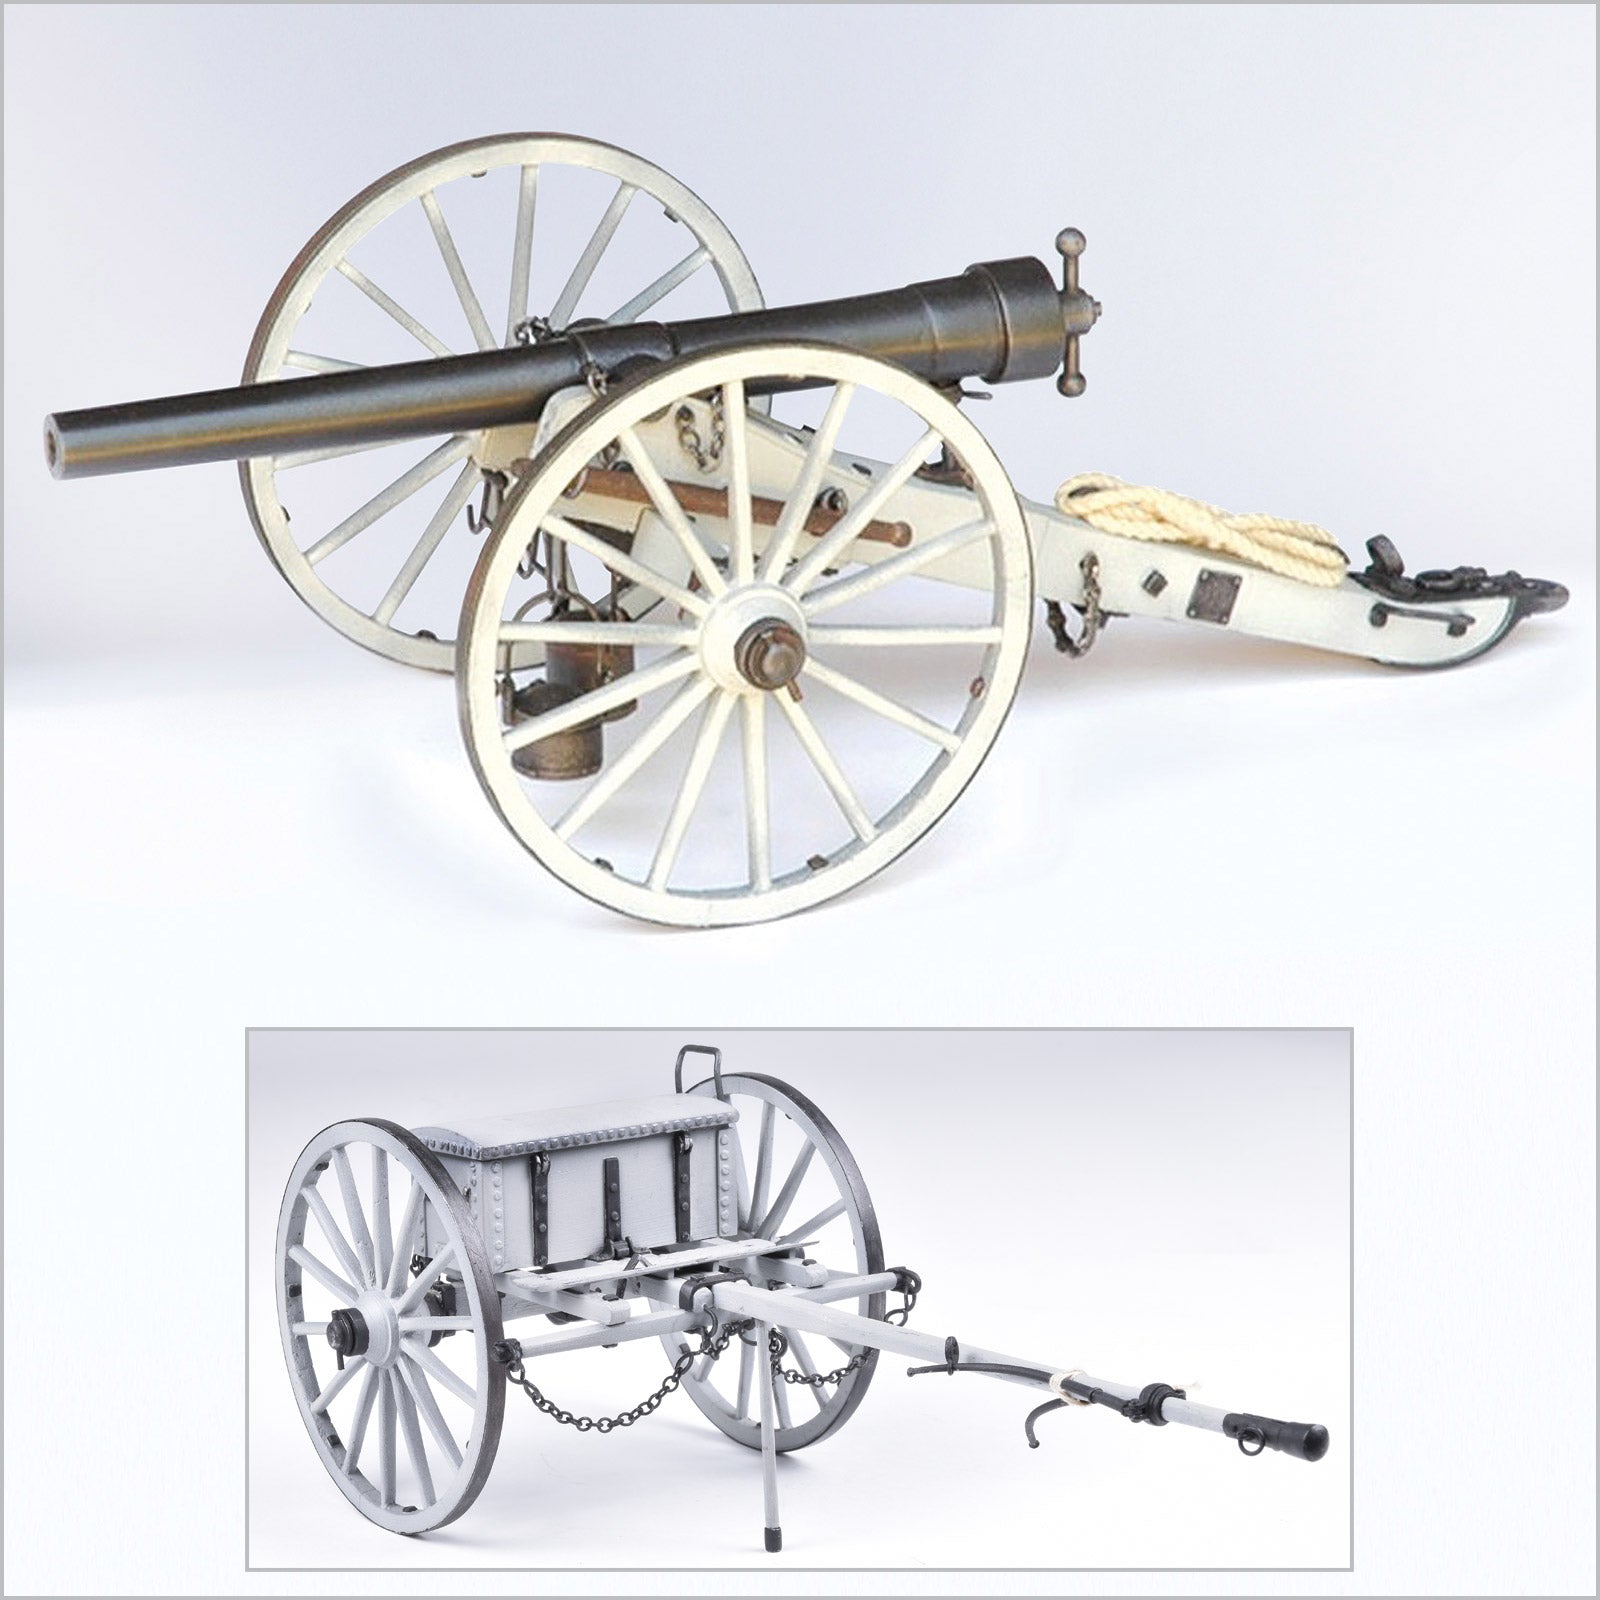 U.S.Civil War "James" Cannon & Limber Ammo Cart Combo Kit, 1/16 Scale